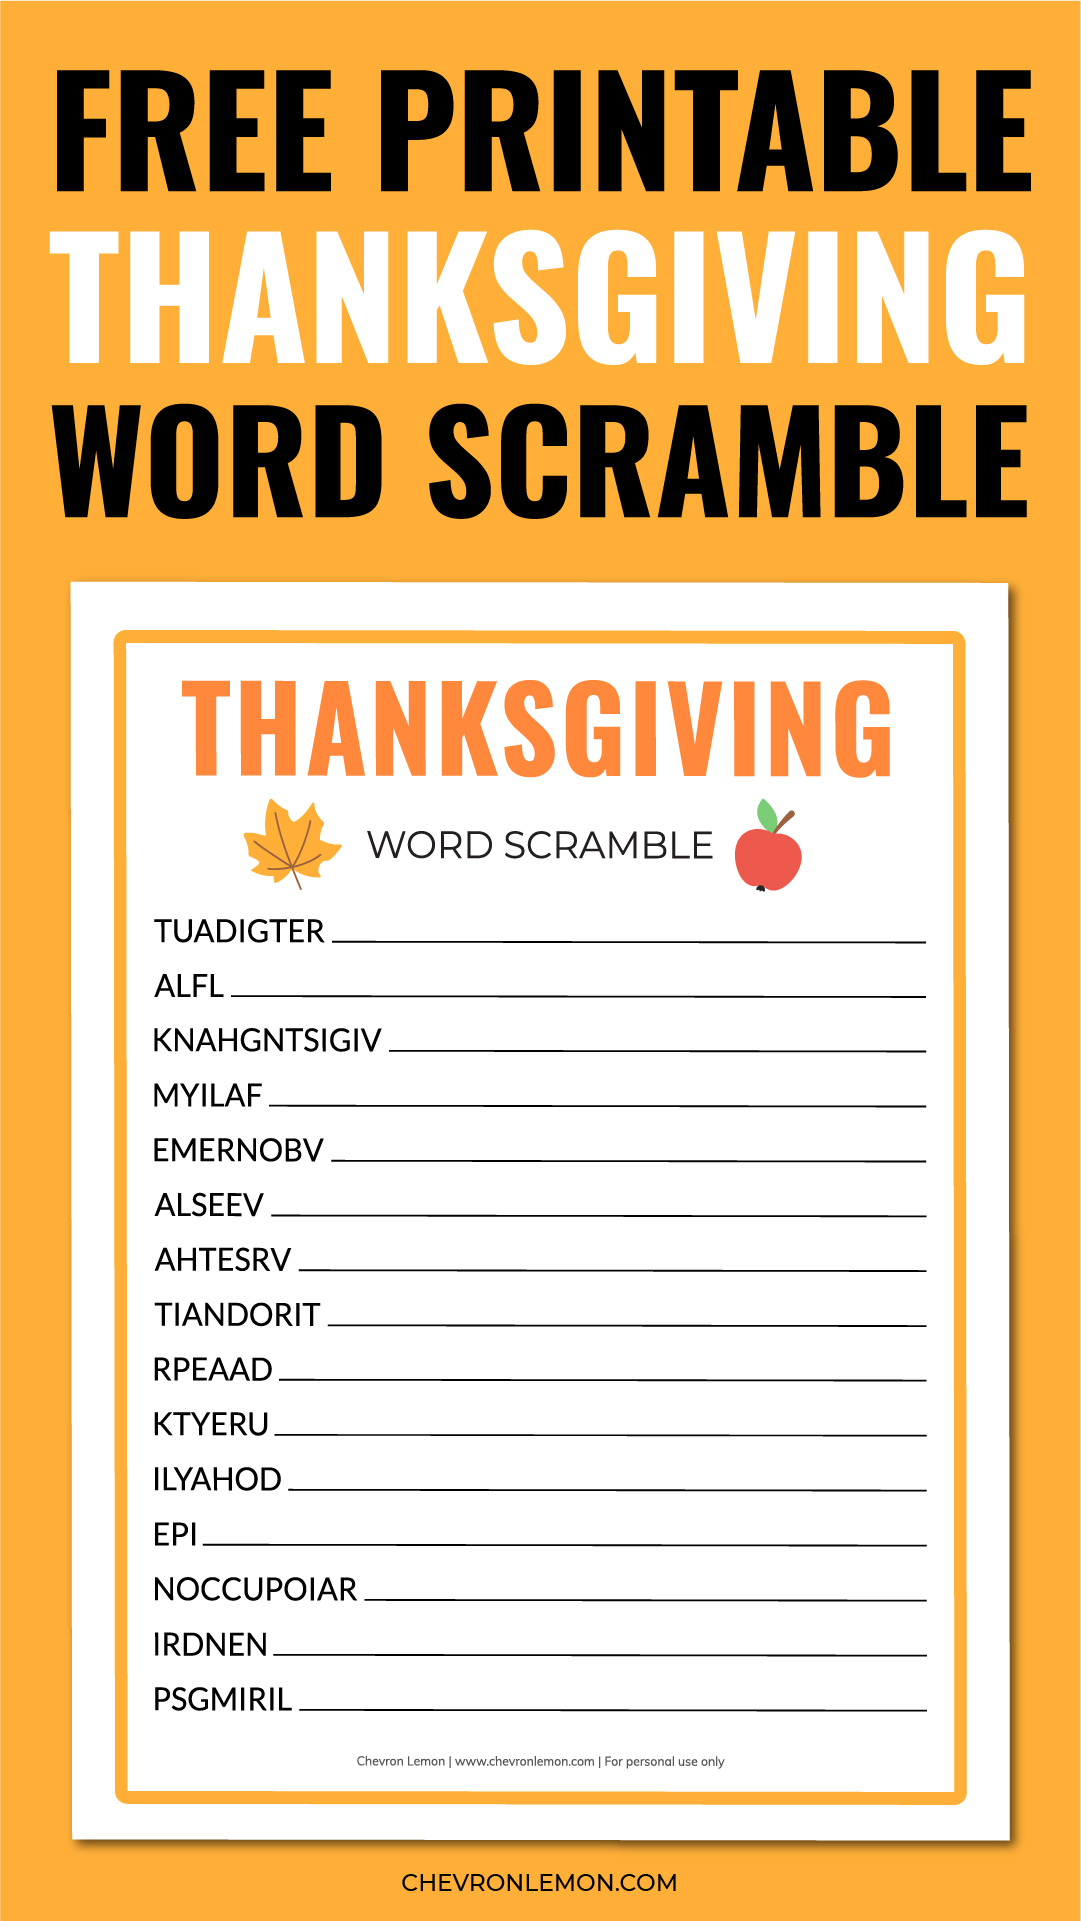 Thanksgiving word scramble